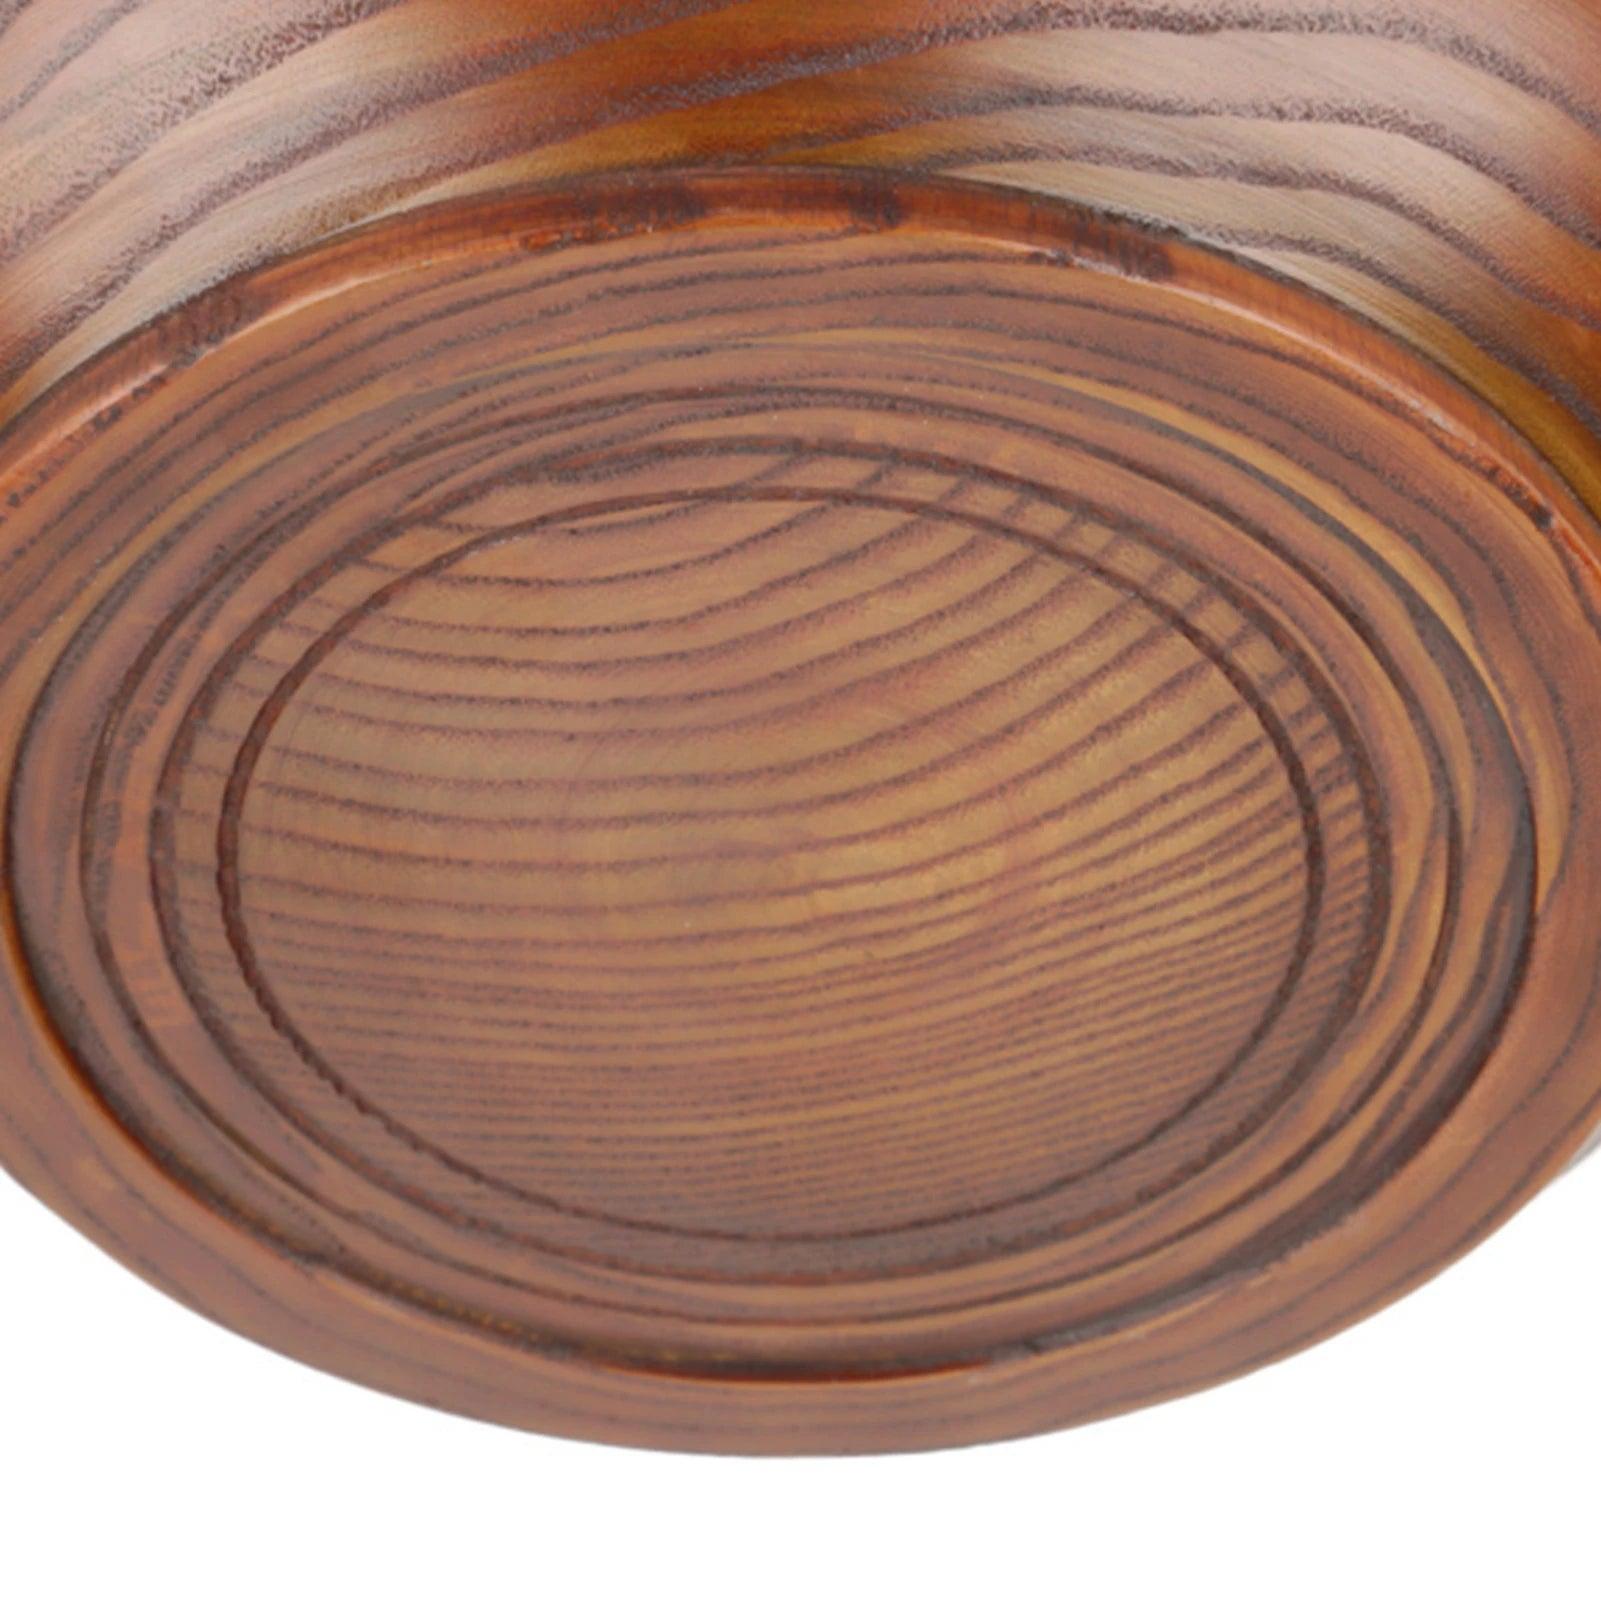 Wooden Yarn Bowl - L & M Kee, LLC